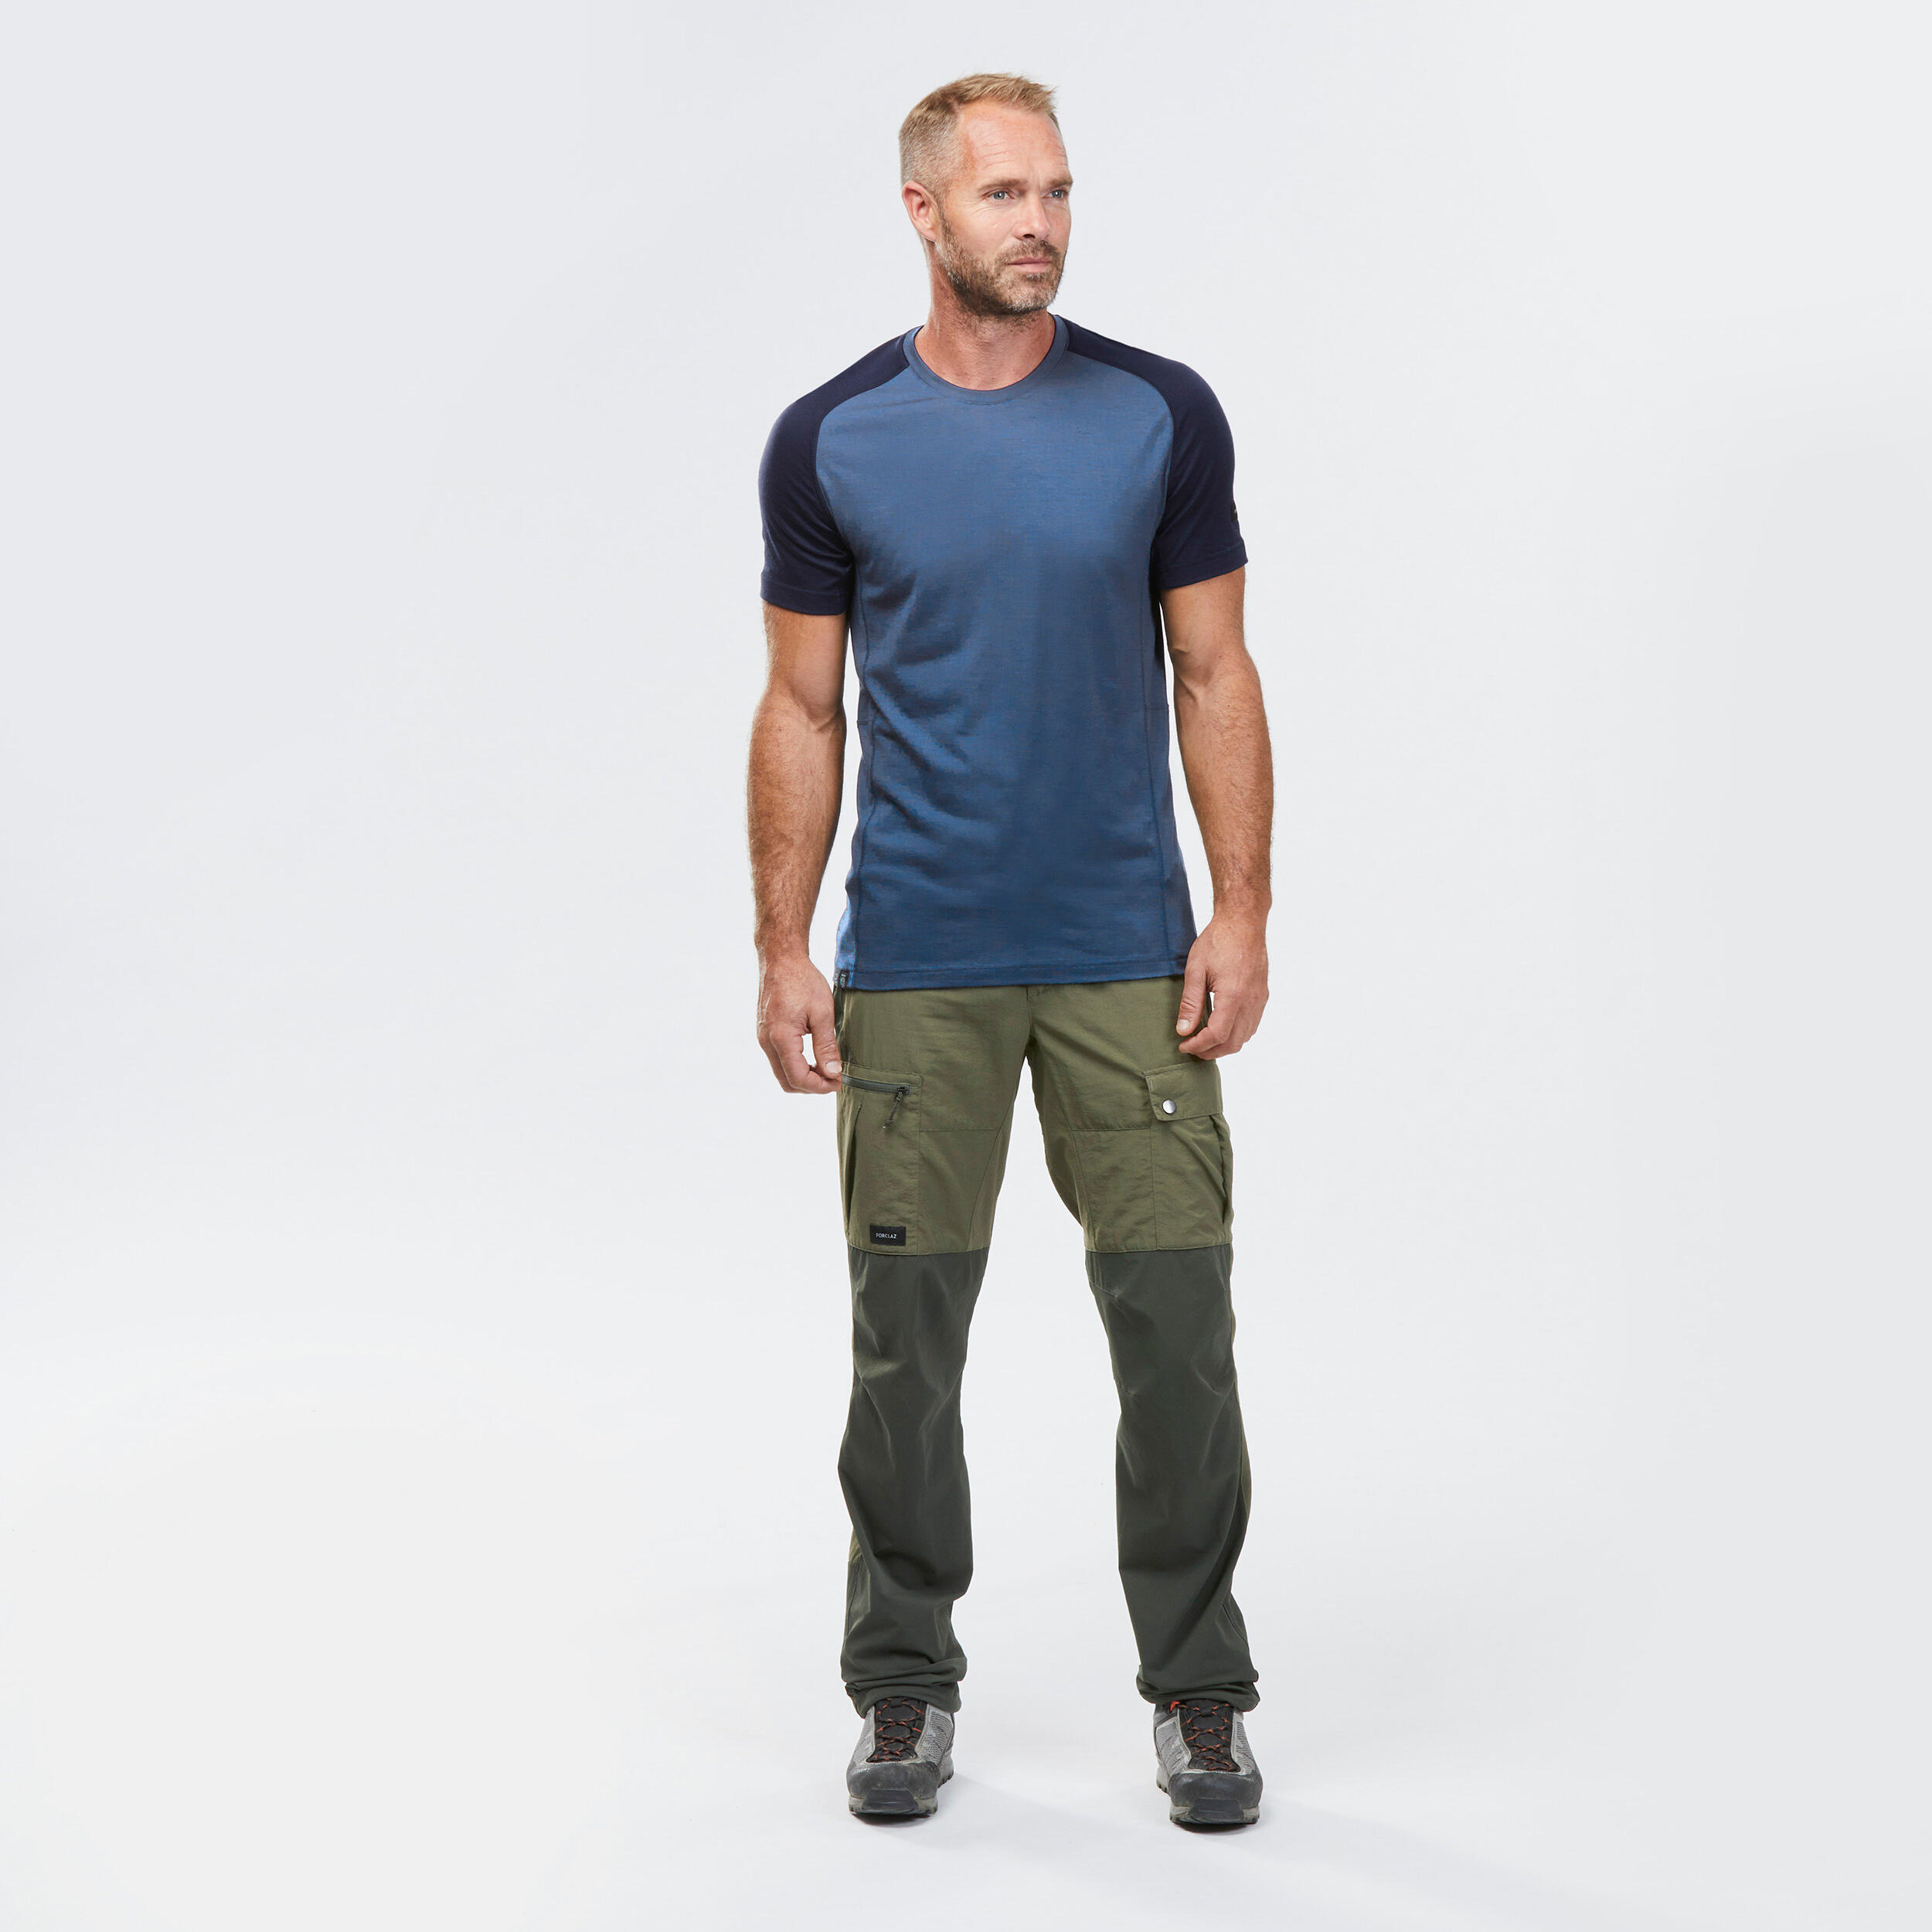 Men's Merino Wool Hiking Shirt - MT 900 - Asphalt blue, Navy blue - Forclaz  - Decathlon